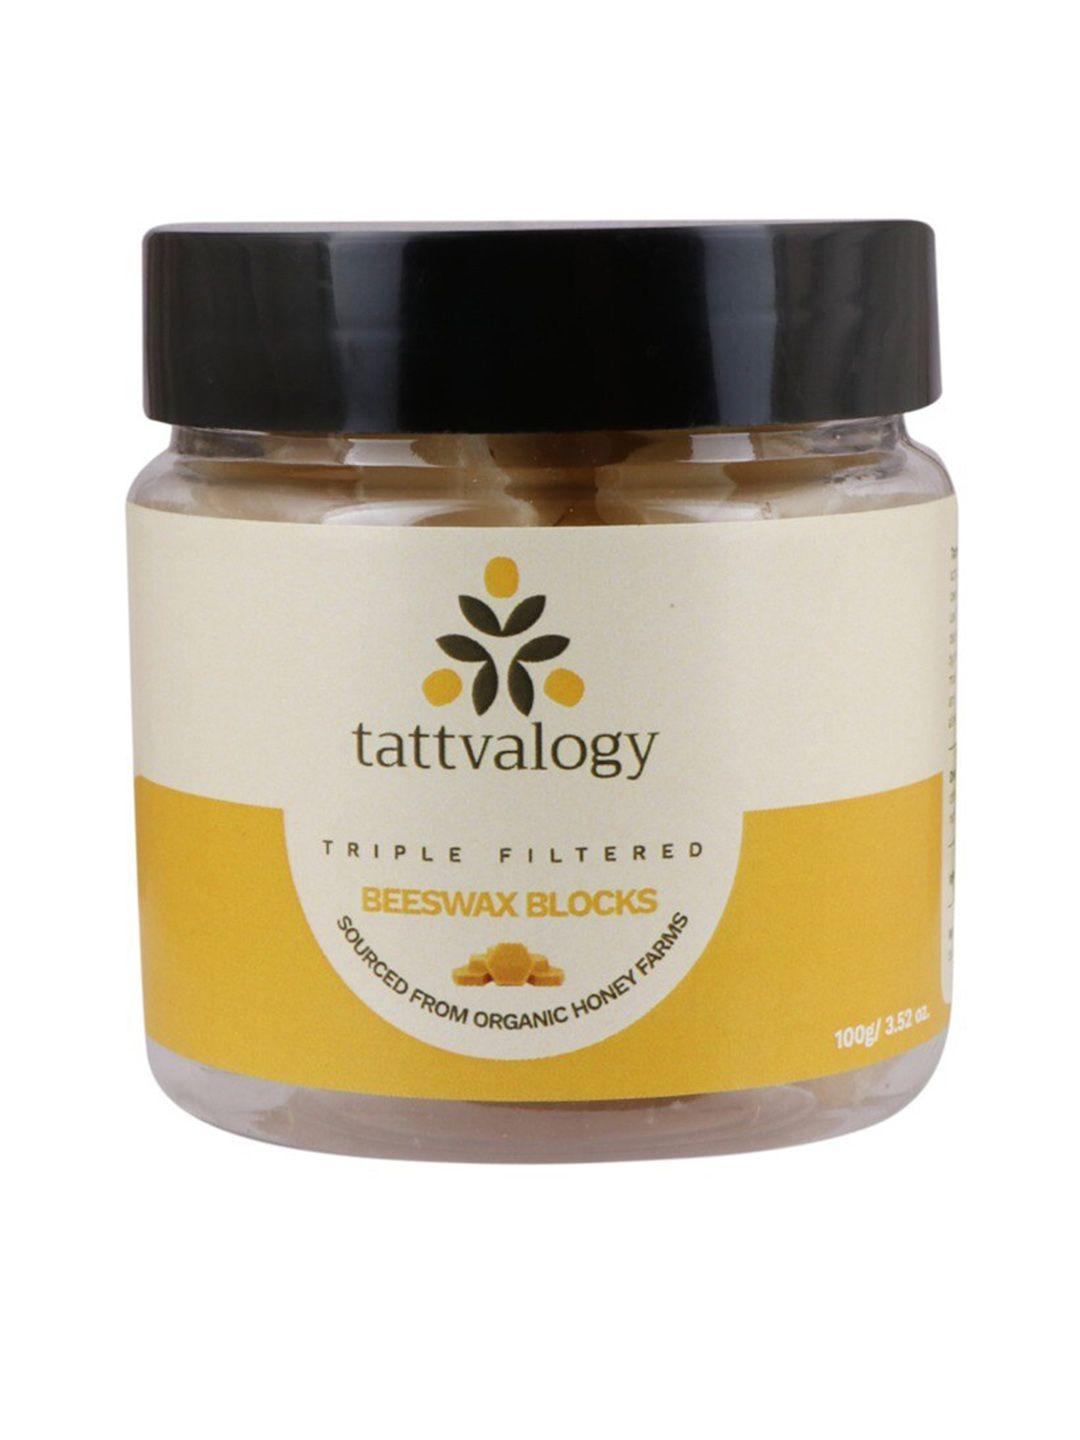 tattvalogy triple filtered pure natural beeswax blocks - 100 g